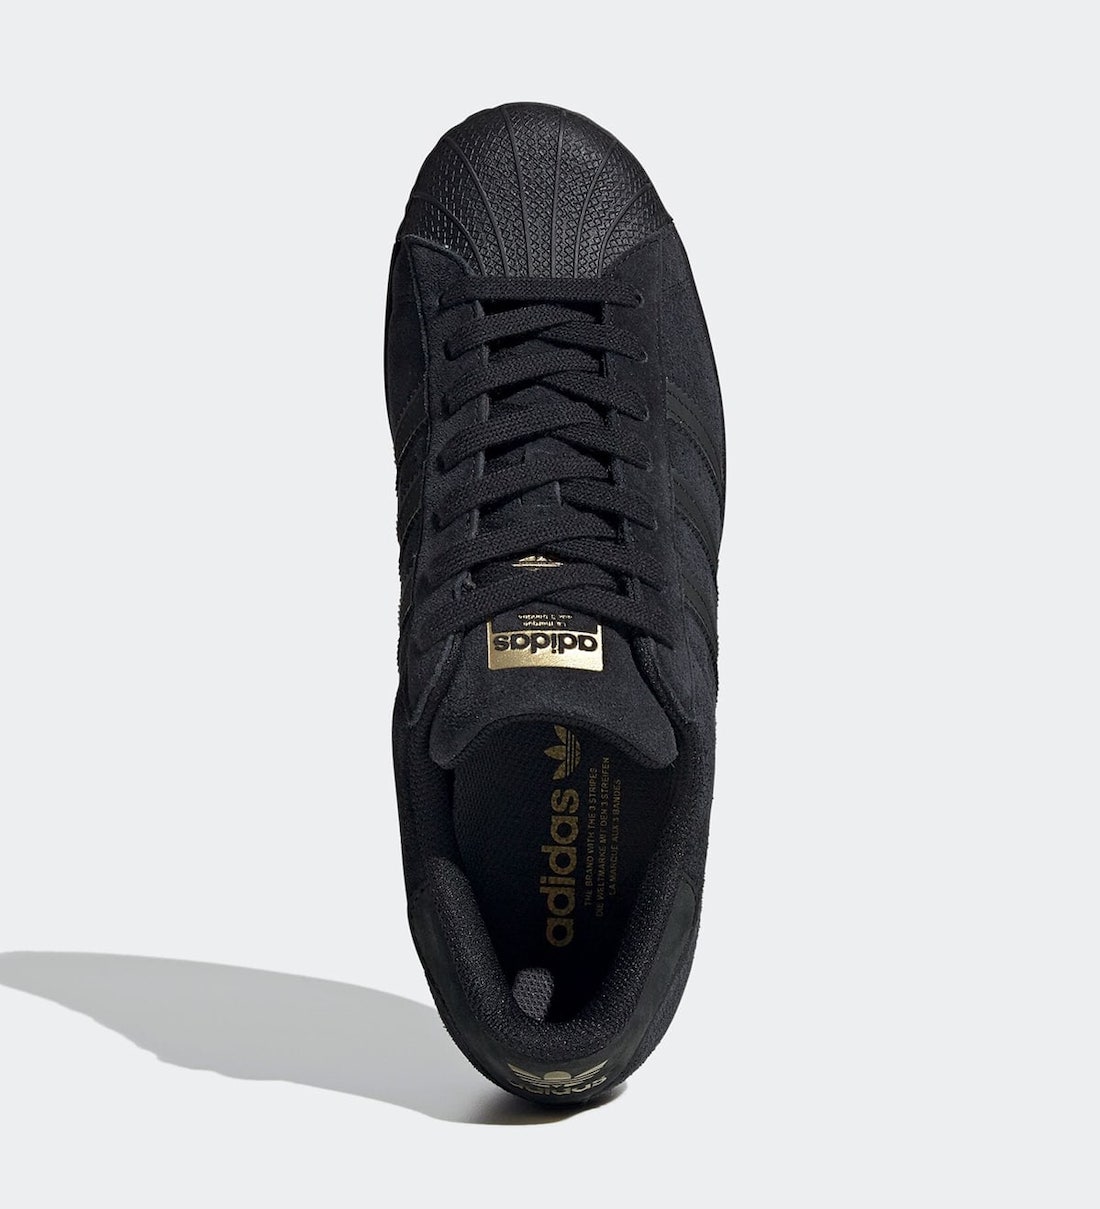 adidas Superstar Black Suede H69158 Release Date